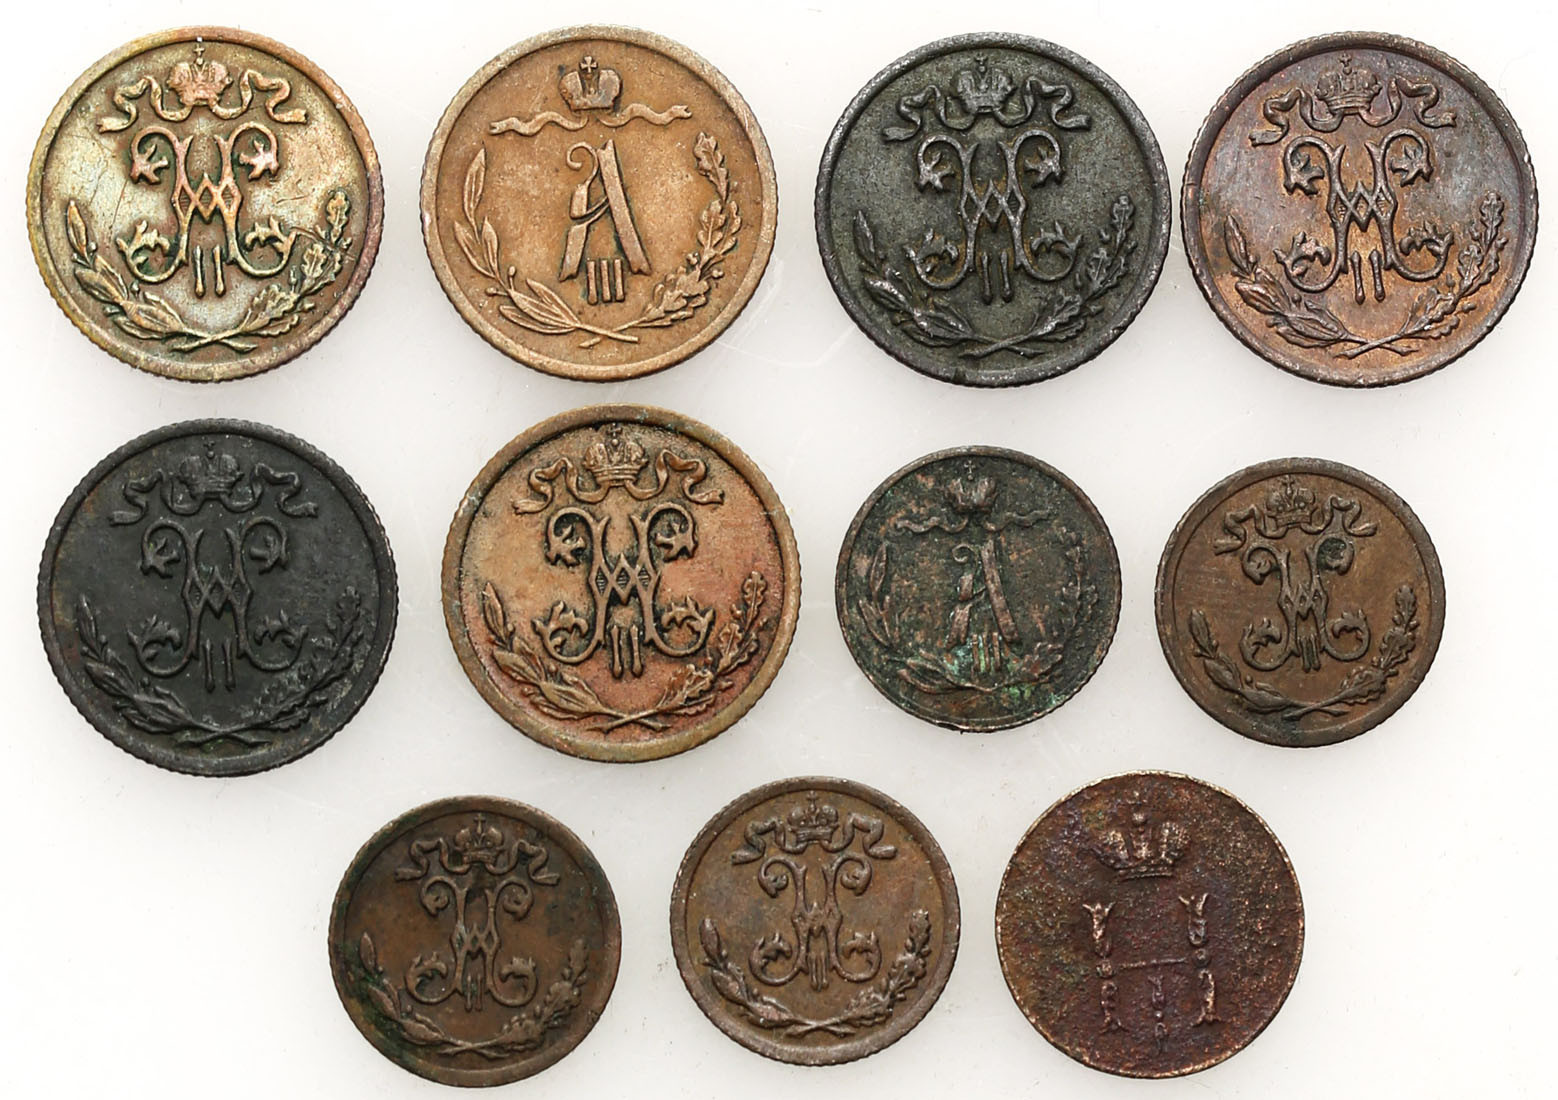 Rosja. 1/4 kopieki, 1/2 kopiejki, połuszka 1852 - 1909, zestaw 11 monet